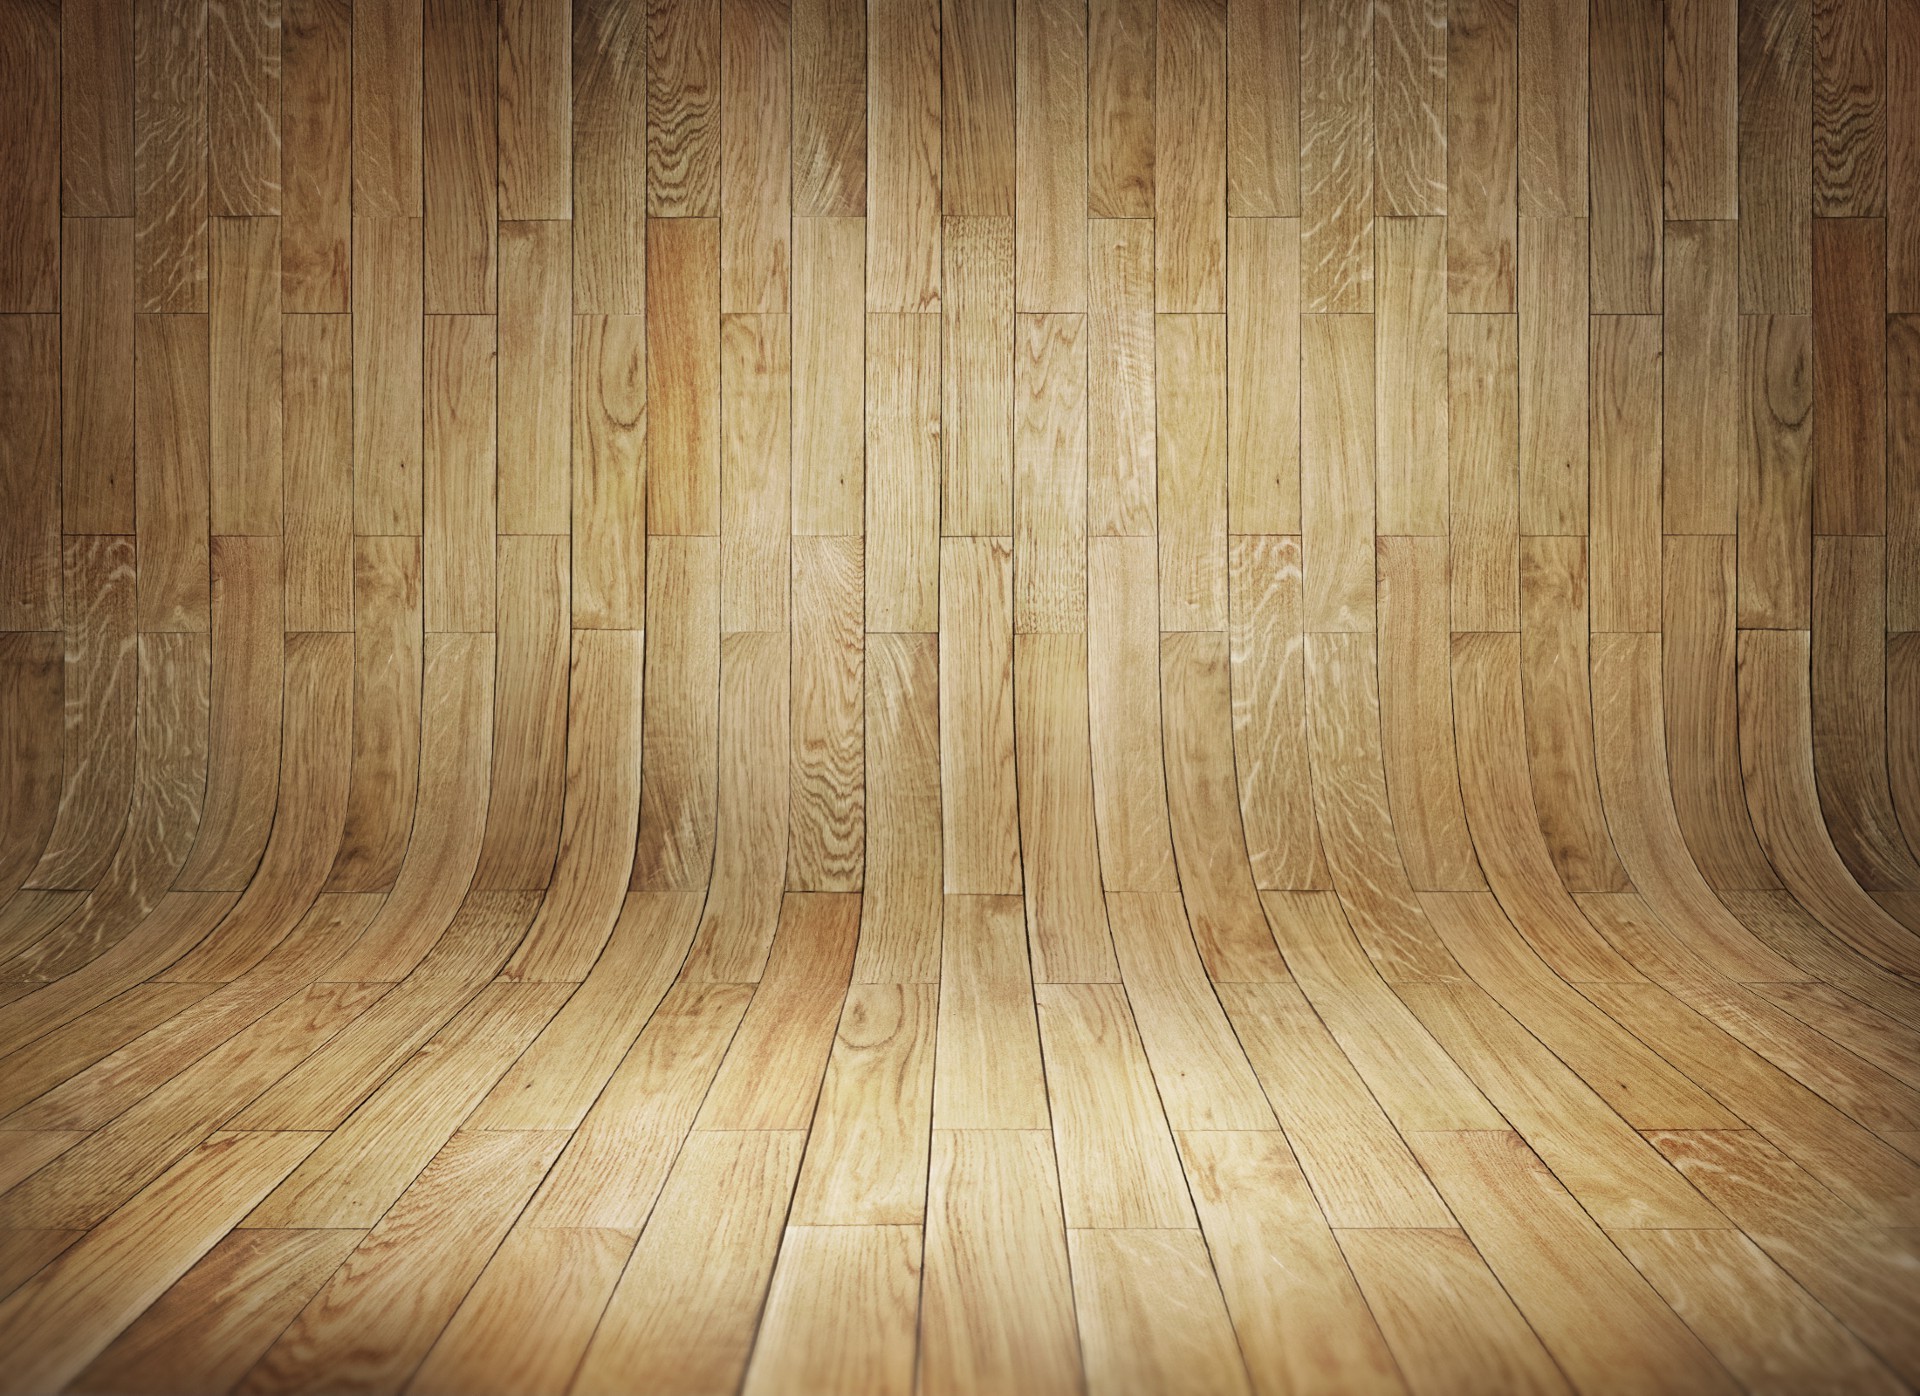 tree floor hardwood wood parquet wooden wall log surface board fabric rough carpentry empty retro pine furniture panel oak old inside